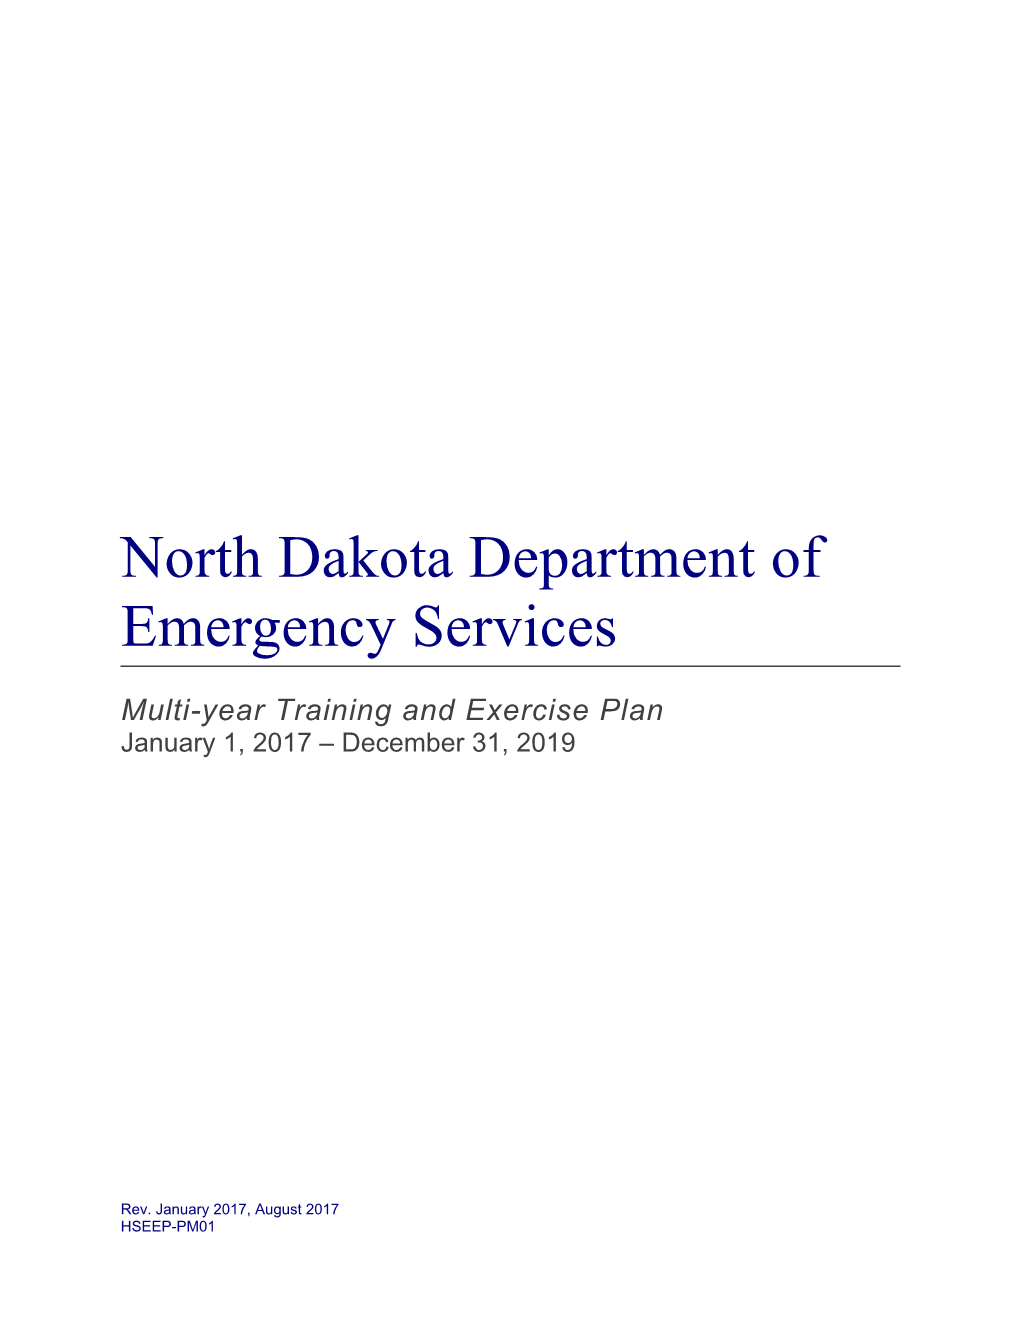 North Dakota Department of Emergency Services